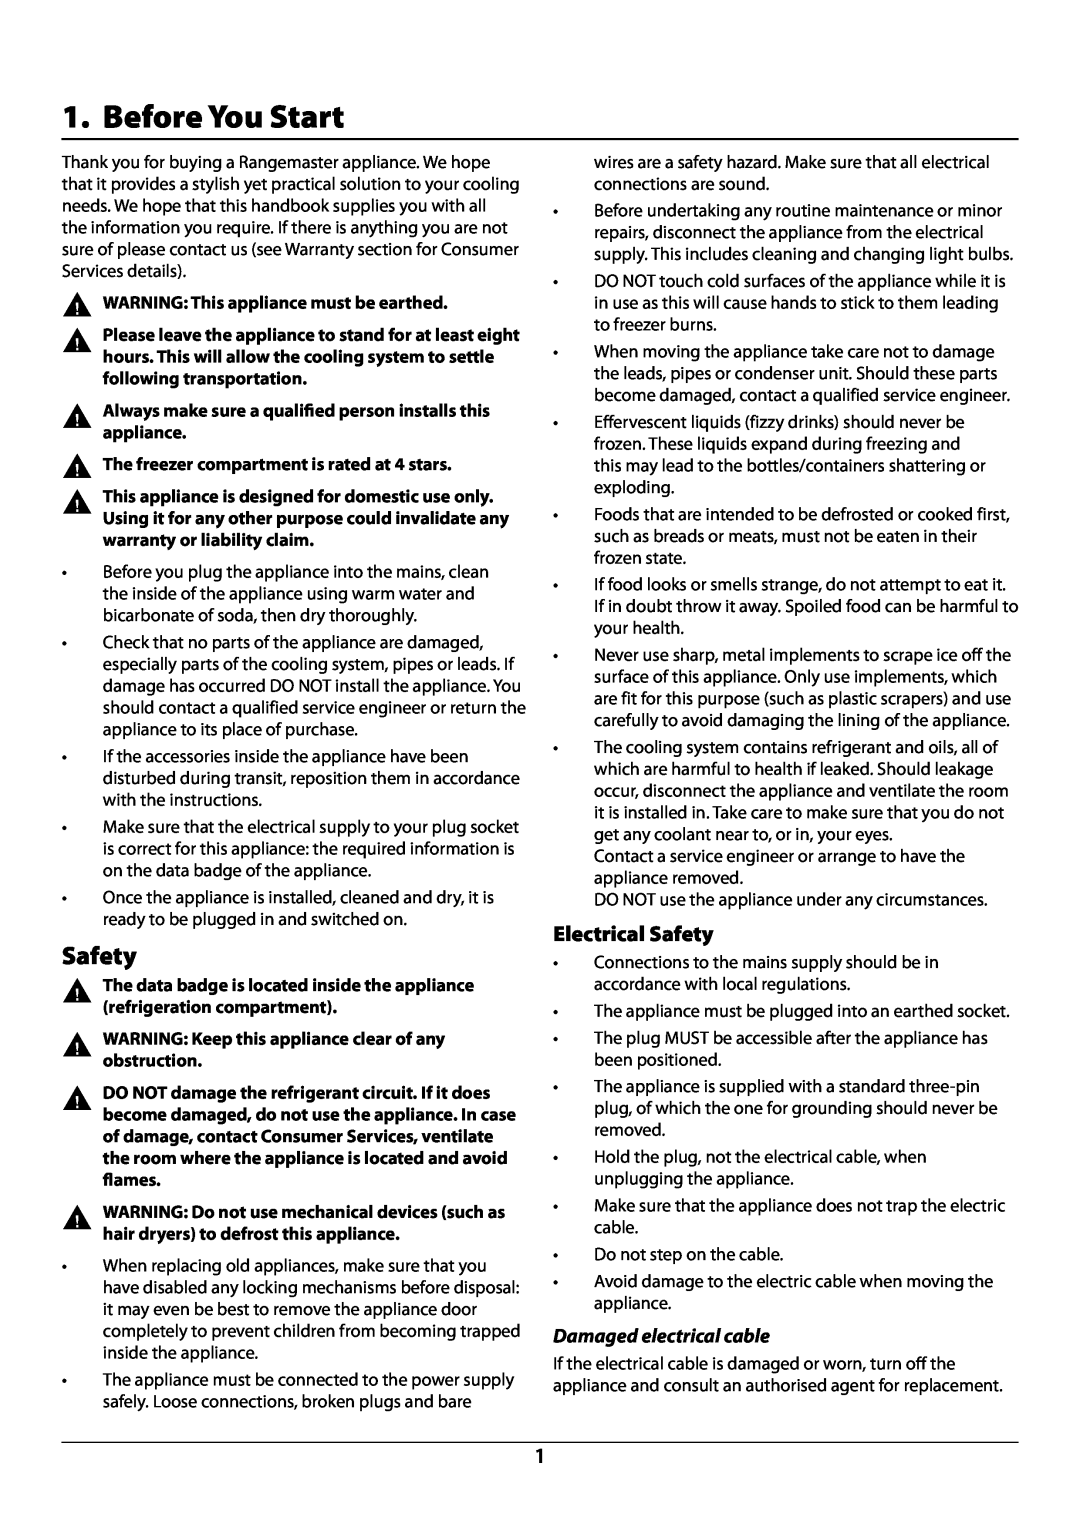 Rangemaster U110122-01B manual Before You Start, Electrical Safety, Damaged electrical cable 